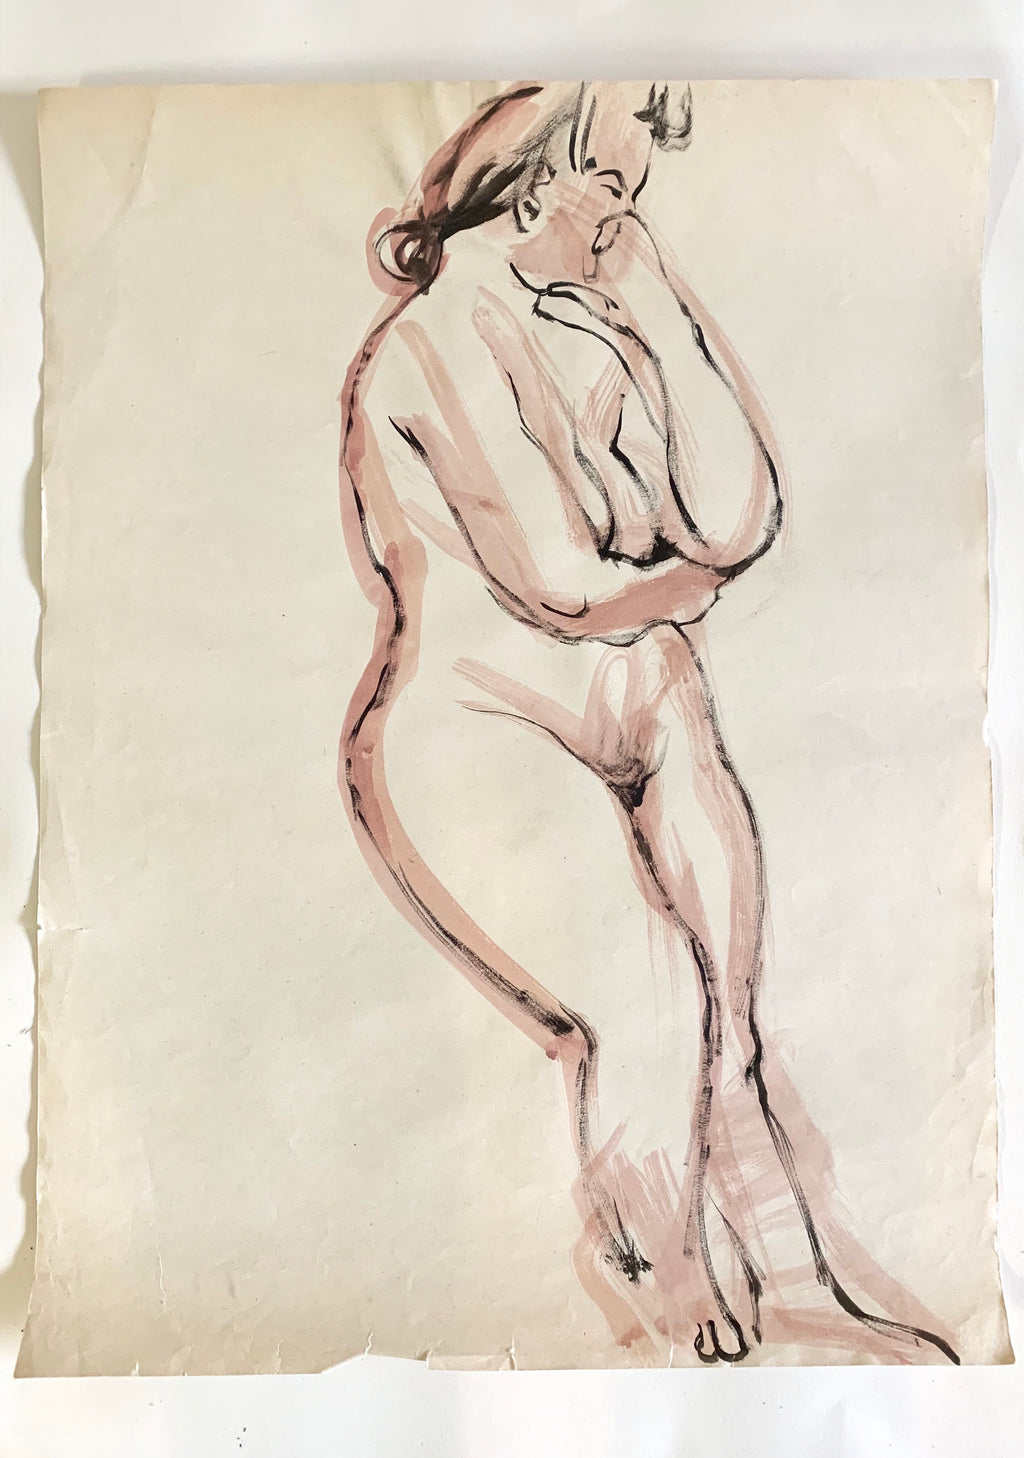 Vintage Nude Sketch #1 by Tom Sheffield